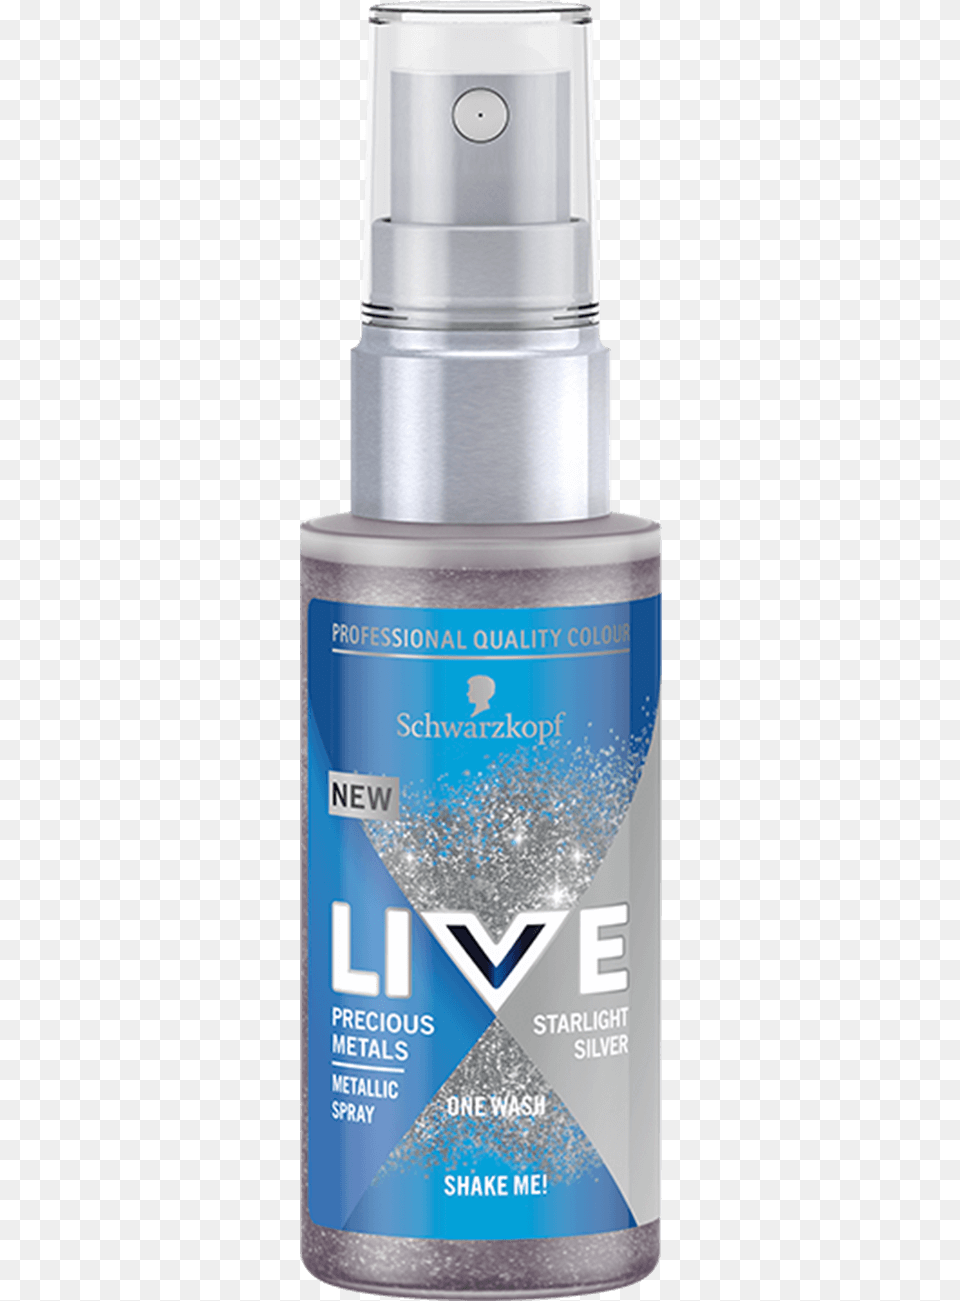 Live Color Uk Precious Metals Spray Starlight Silver, Cosmetics, Bottle, Deodorant, Can Png